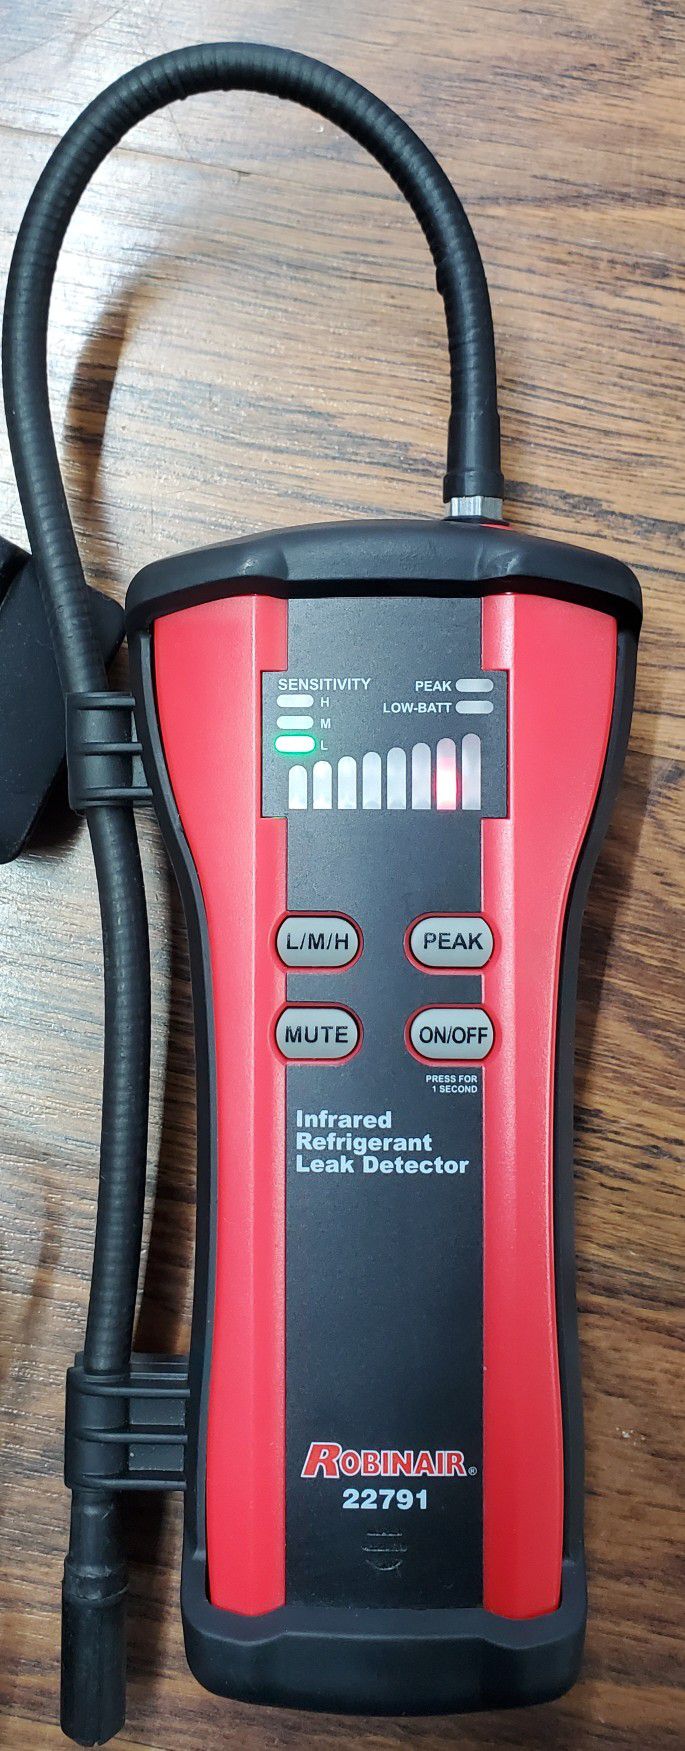 Robinair Infrared Refrigerant Leak Detector 22791